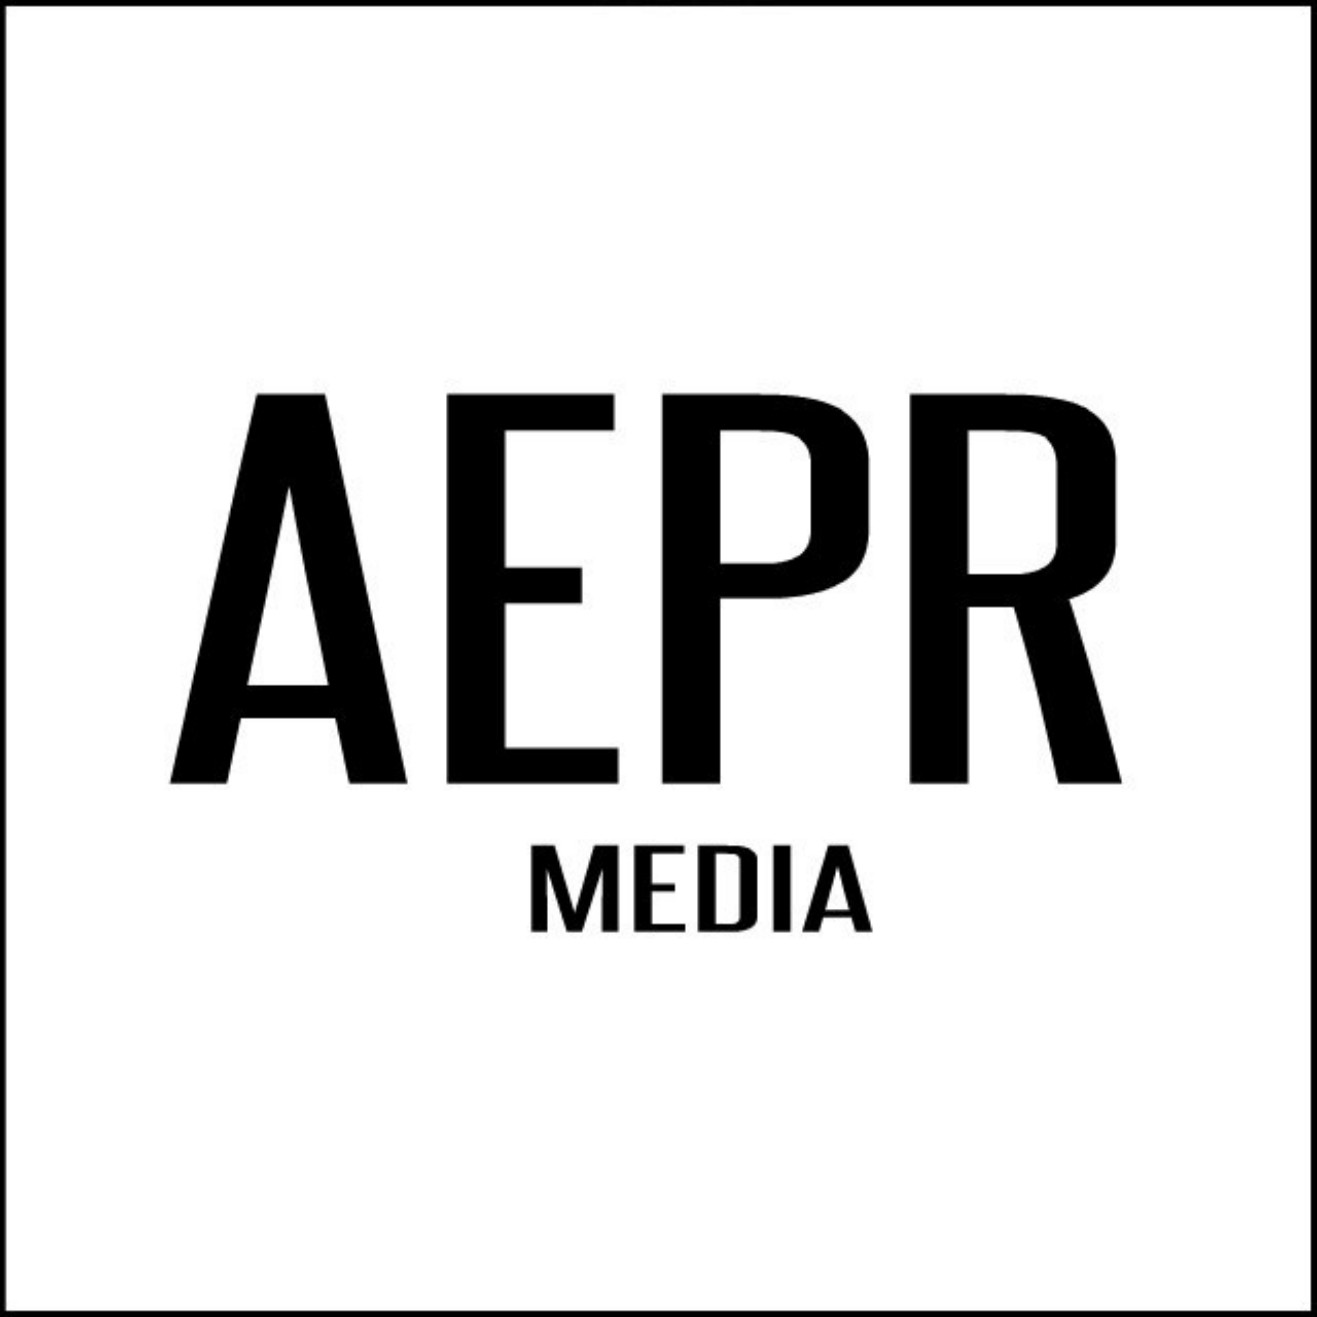 AEPR Public Relations Firm |New York Toronto Los Angeles